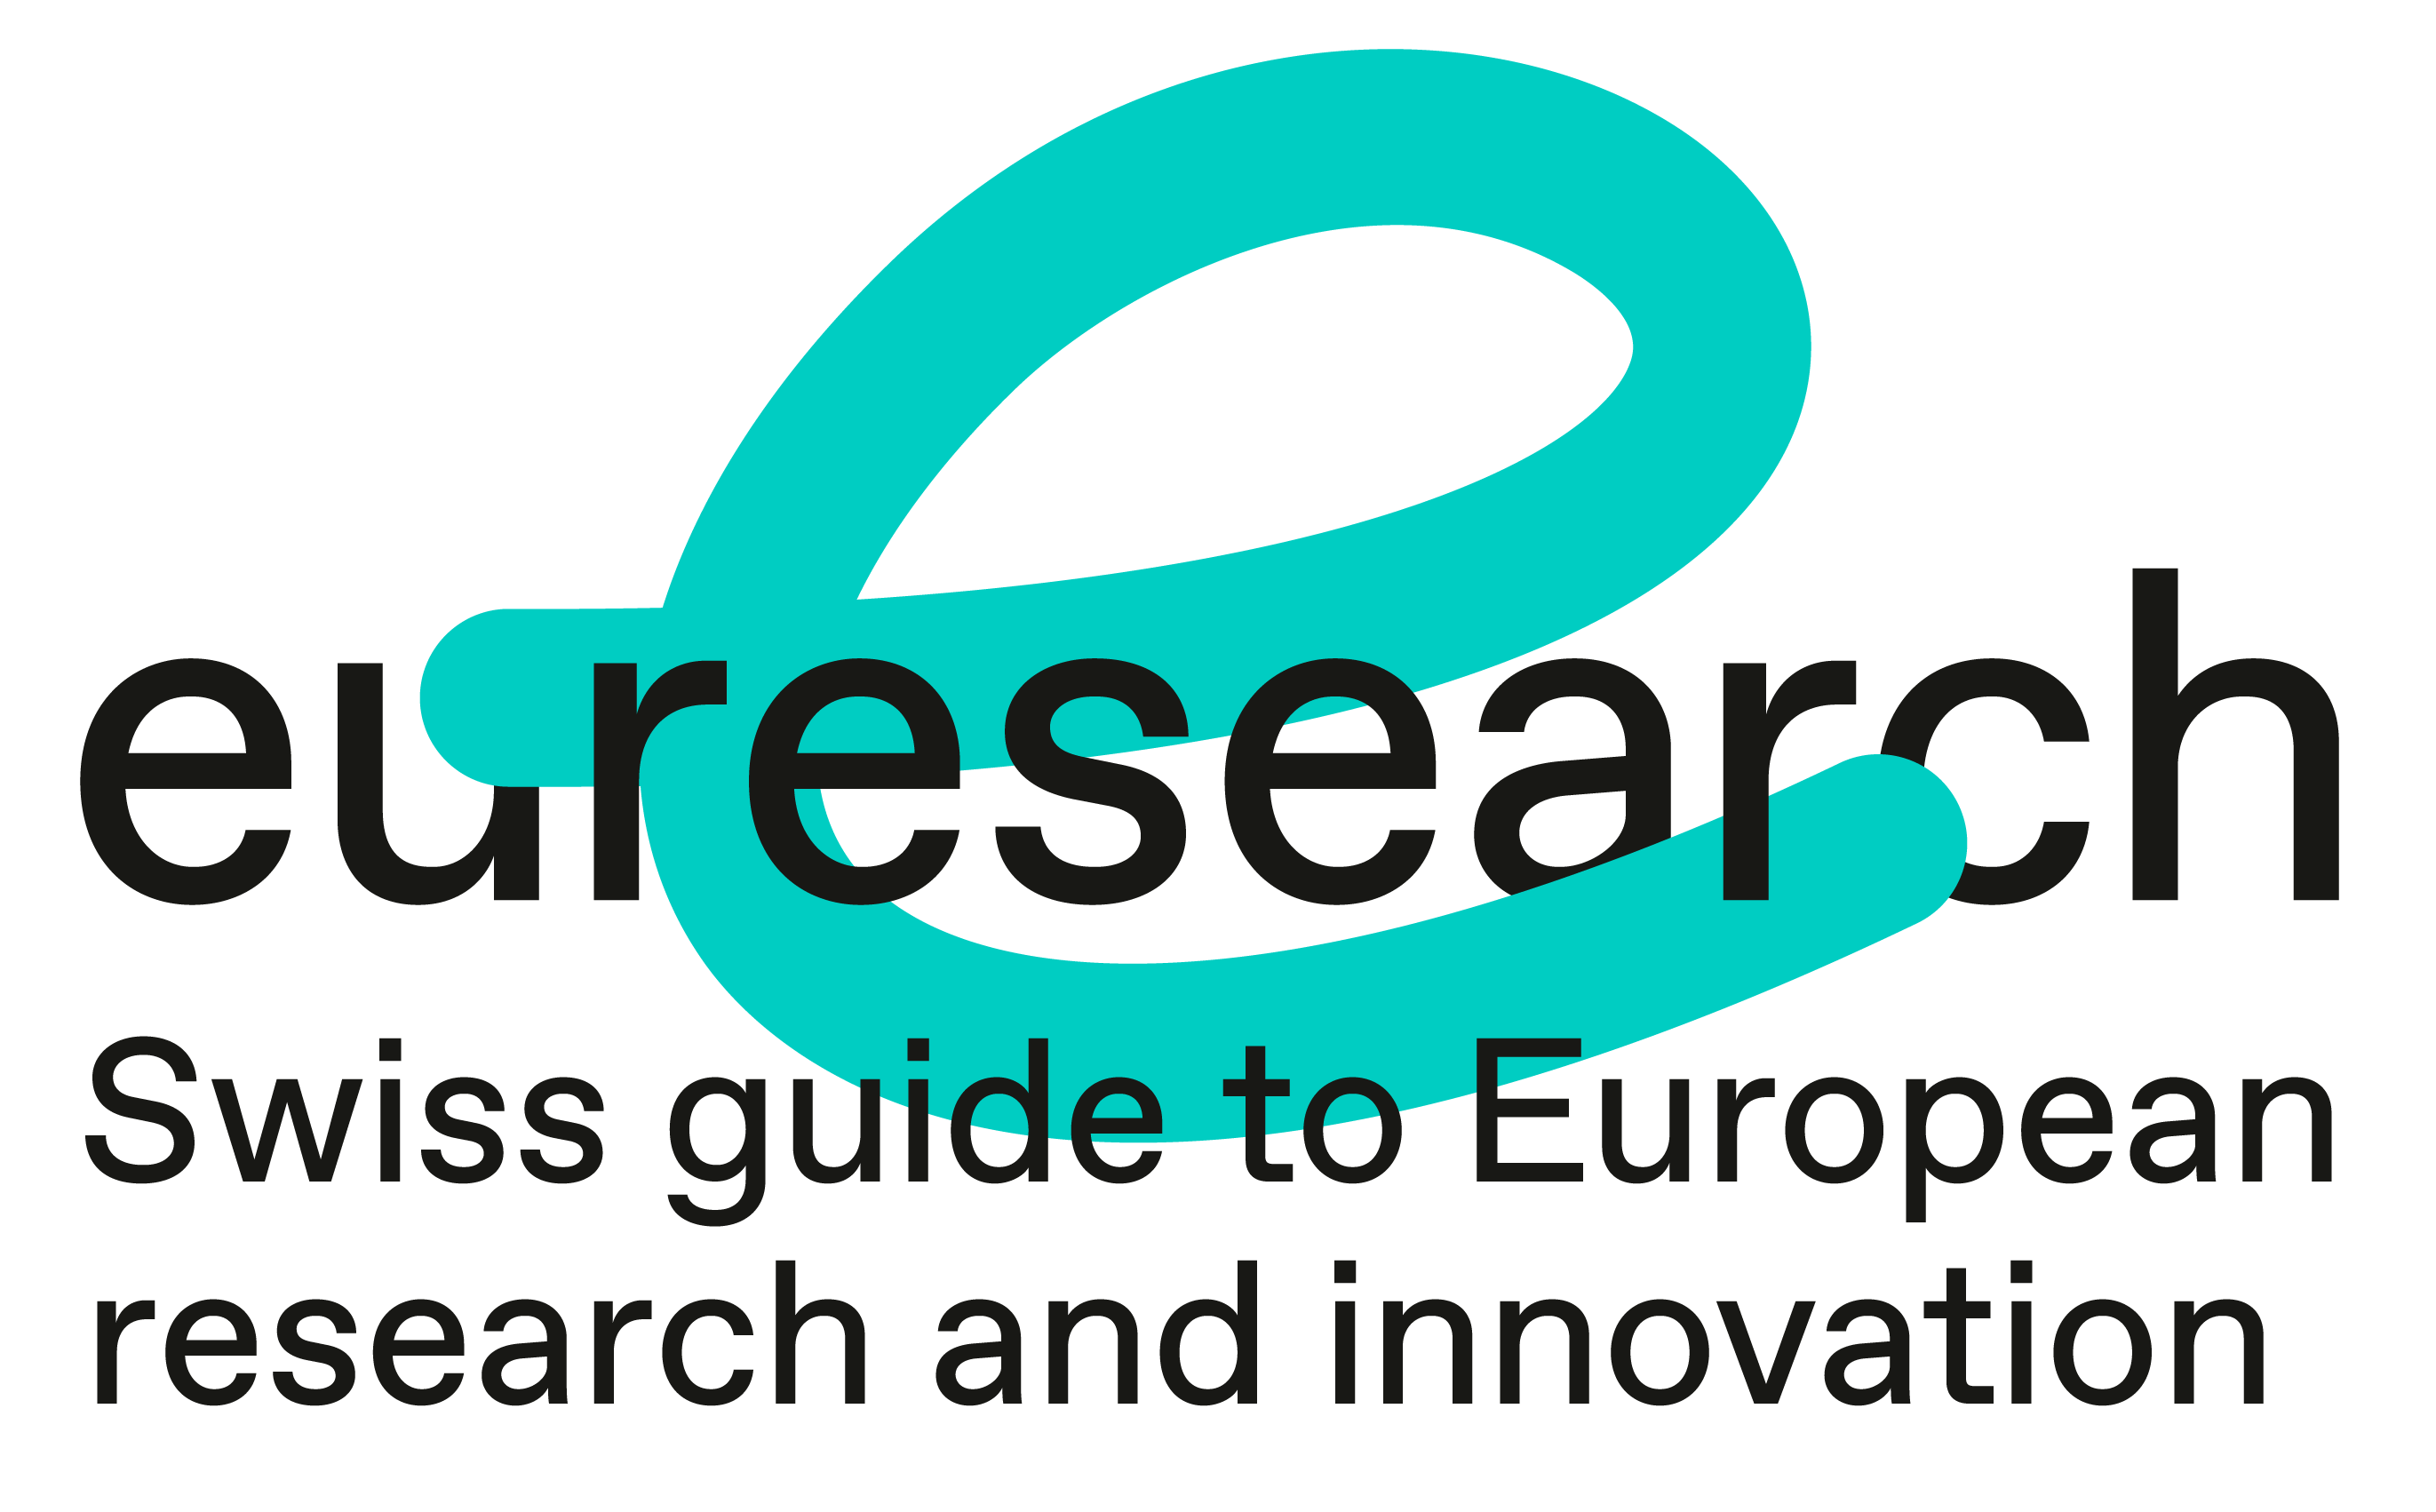 Logo Euresearch